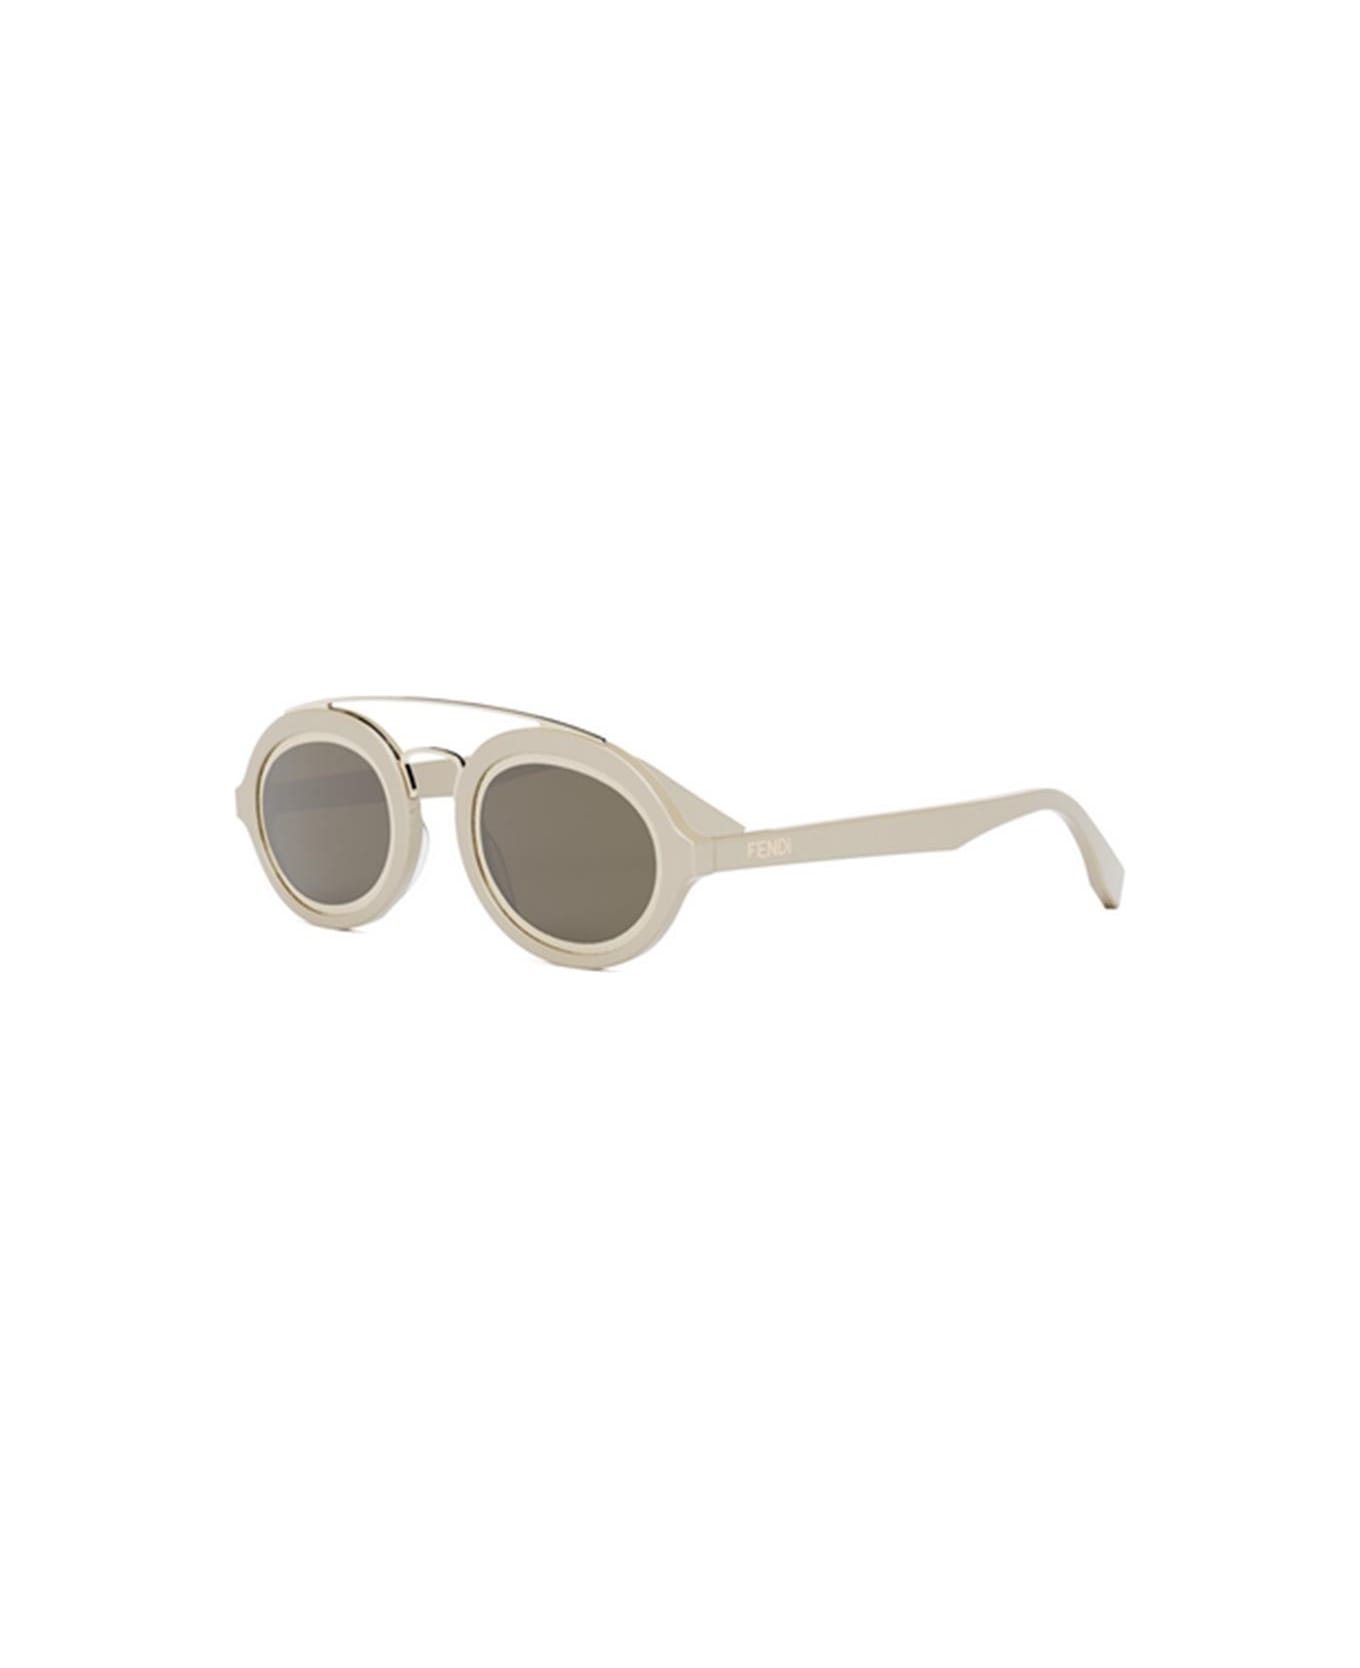 Fendi Eyewear Sunglasses - Avorio/Marrone